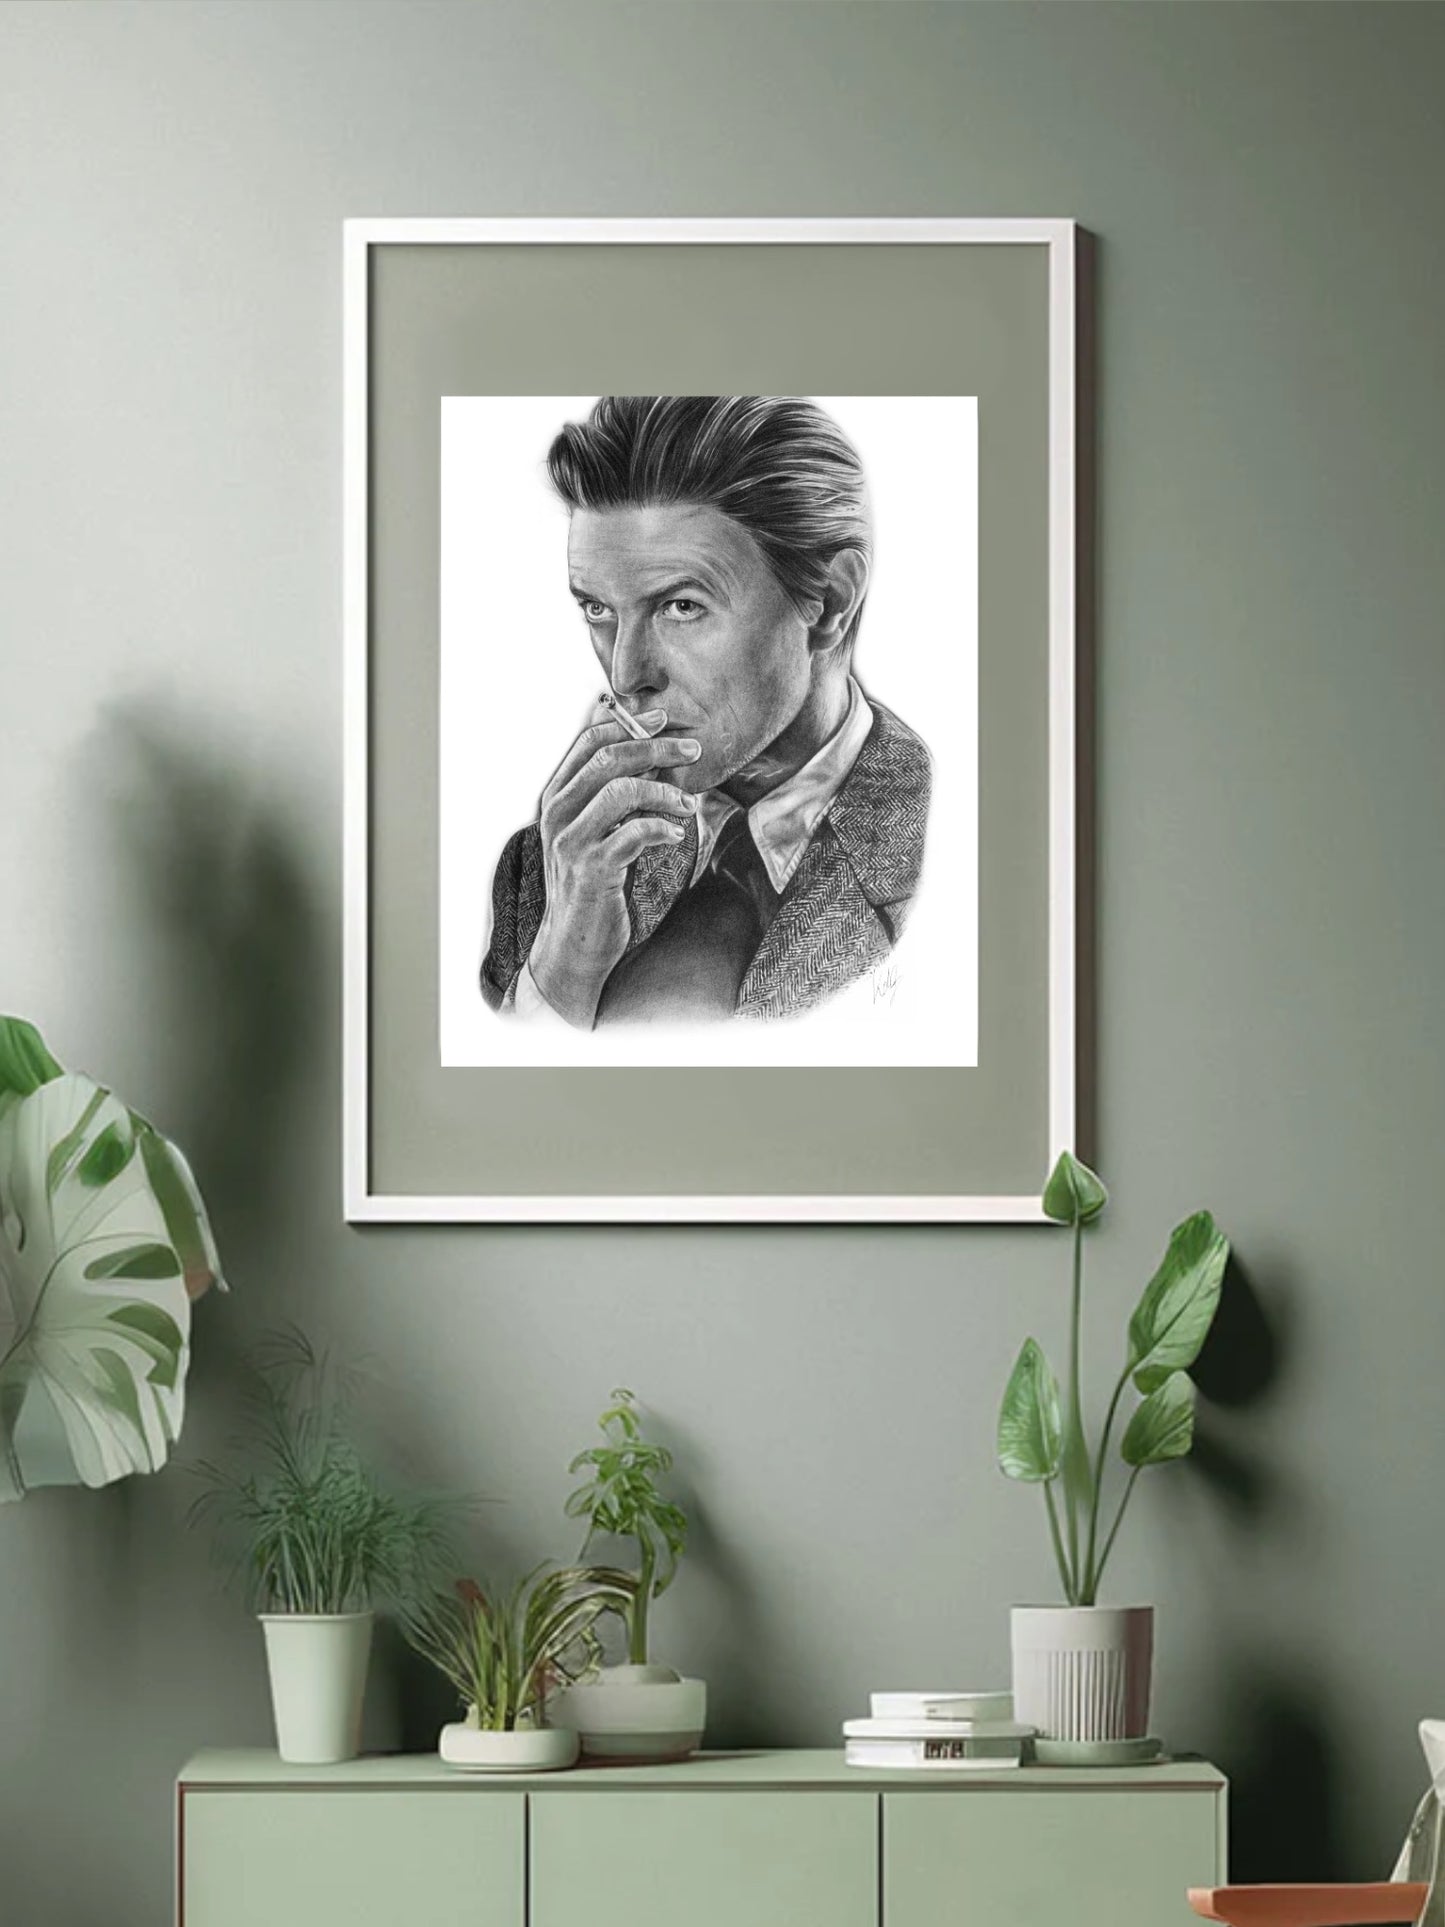 A framed pencil portrait of David Bowie